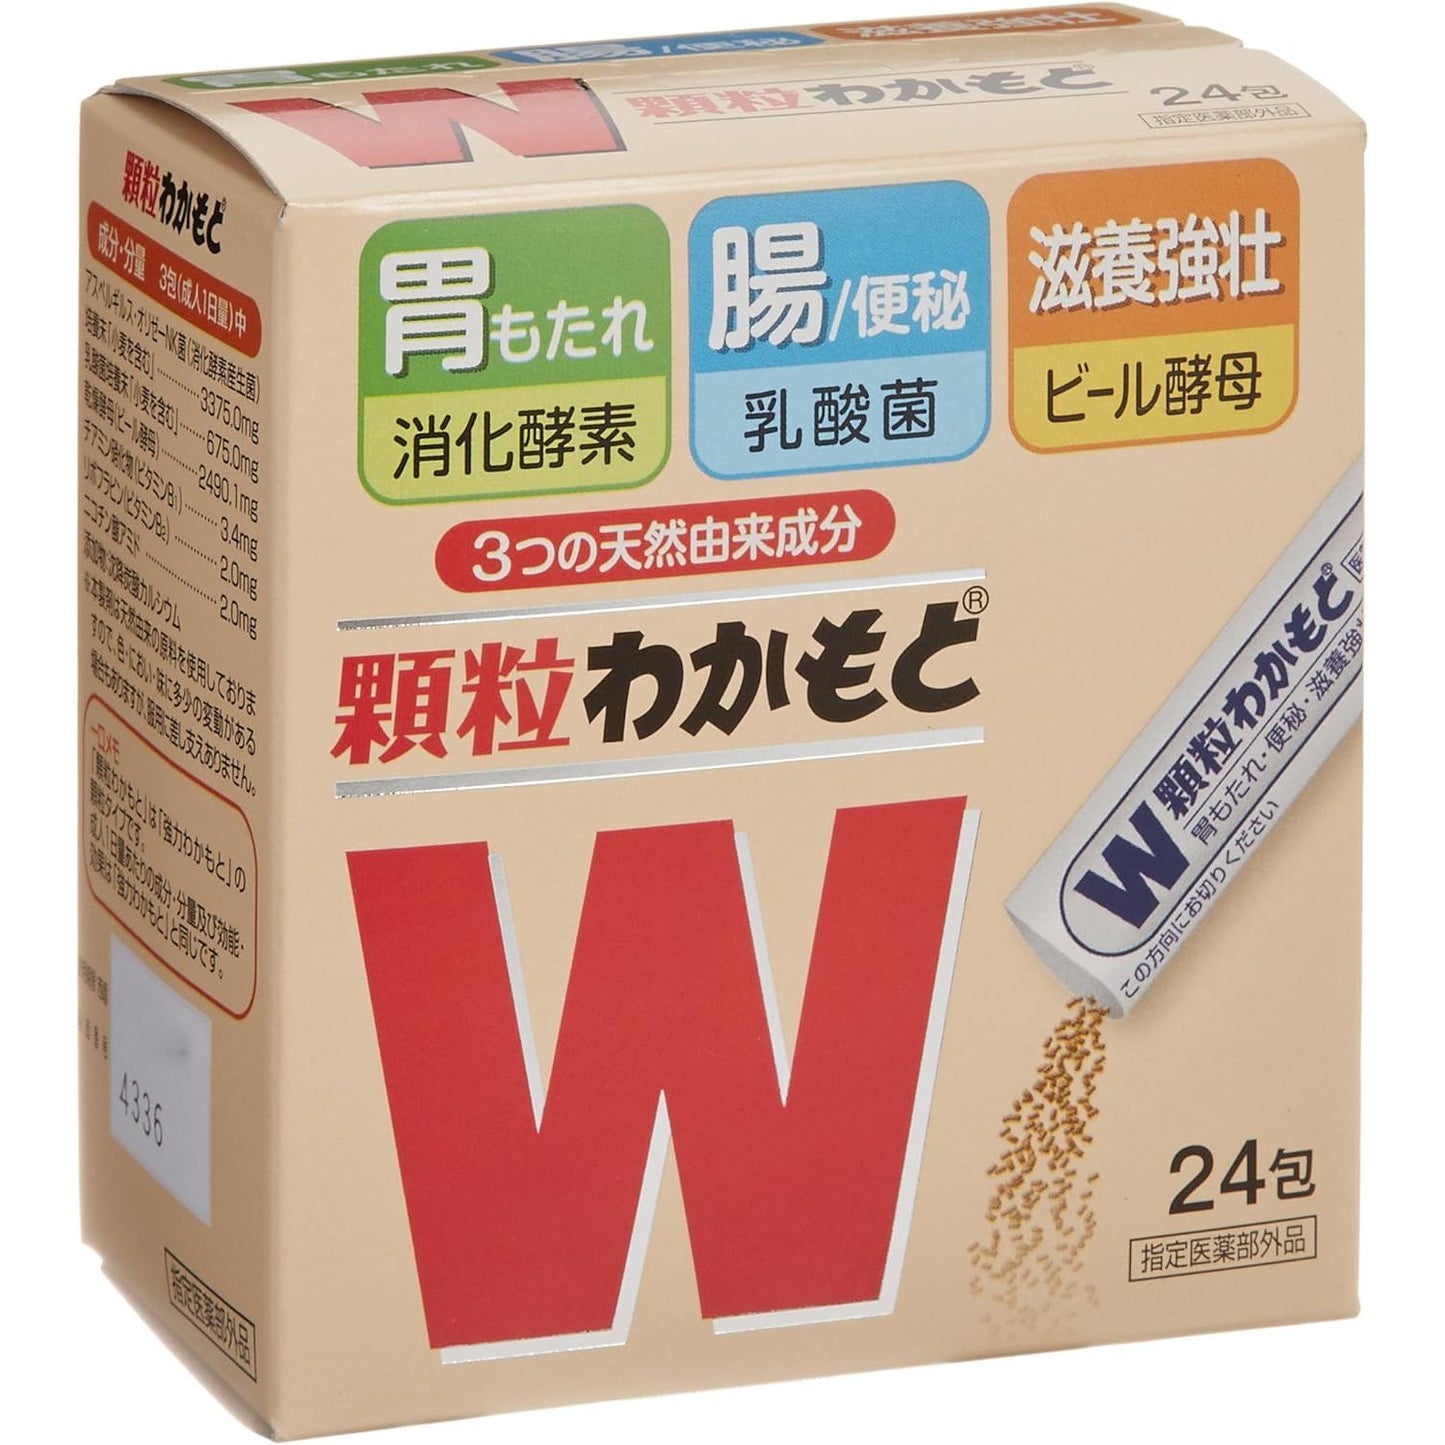 WAKAMOTO若元製藥 強力益生菌健胃整腸粉 整腸劑 24小包入 - 小熊藥妝 - 日本藥妝直送台灣